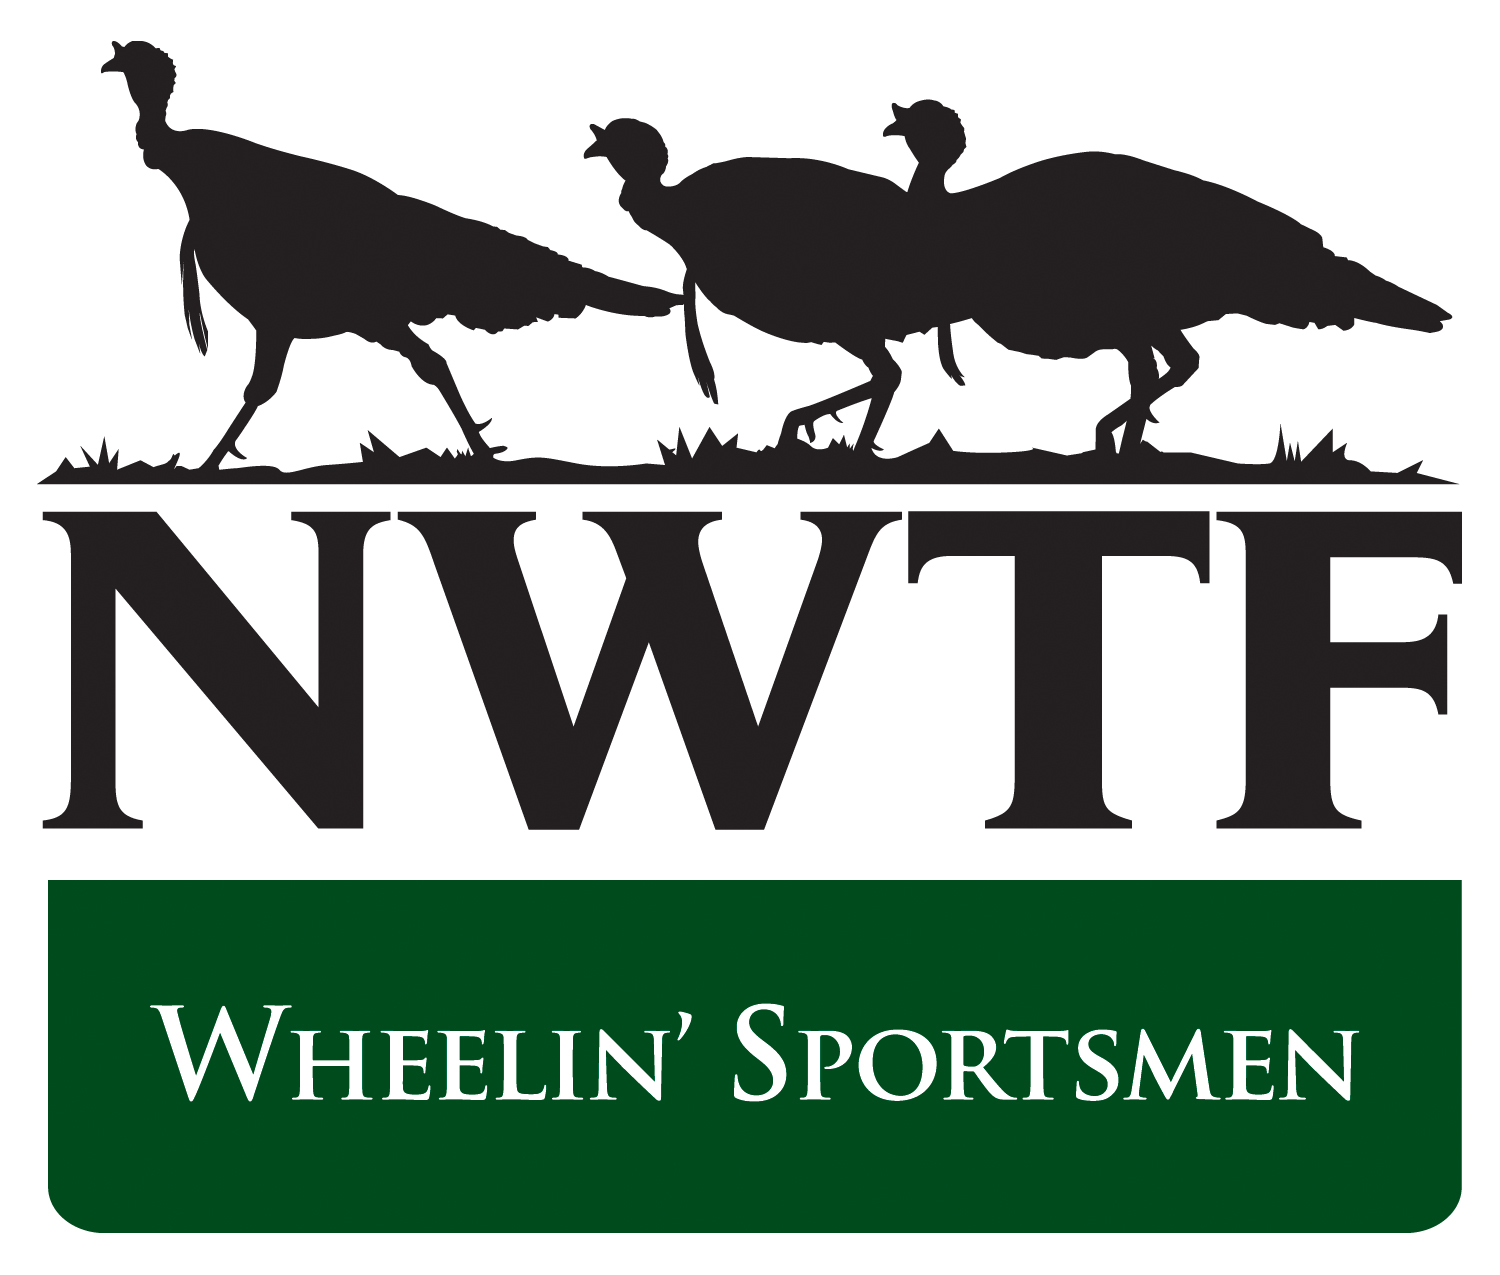 NWTF Wheelin' Sportsmen Logo